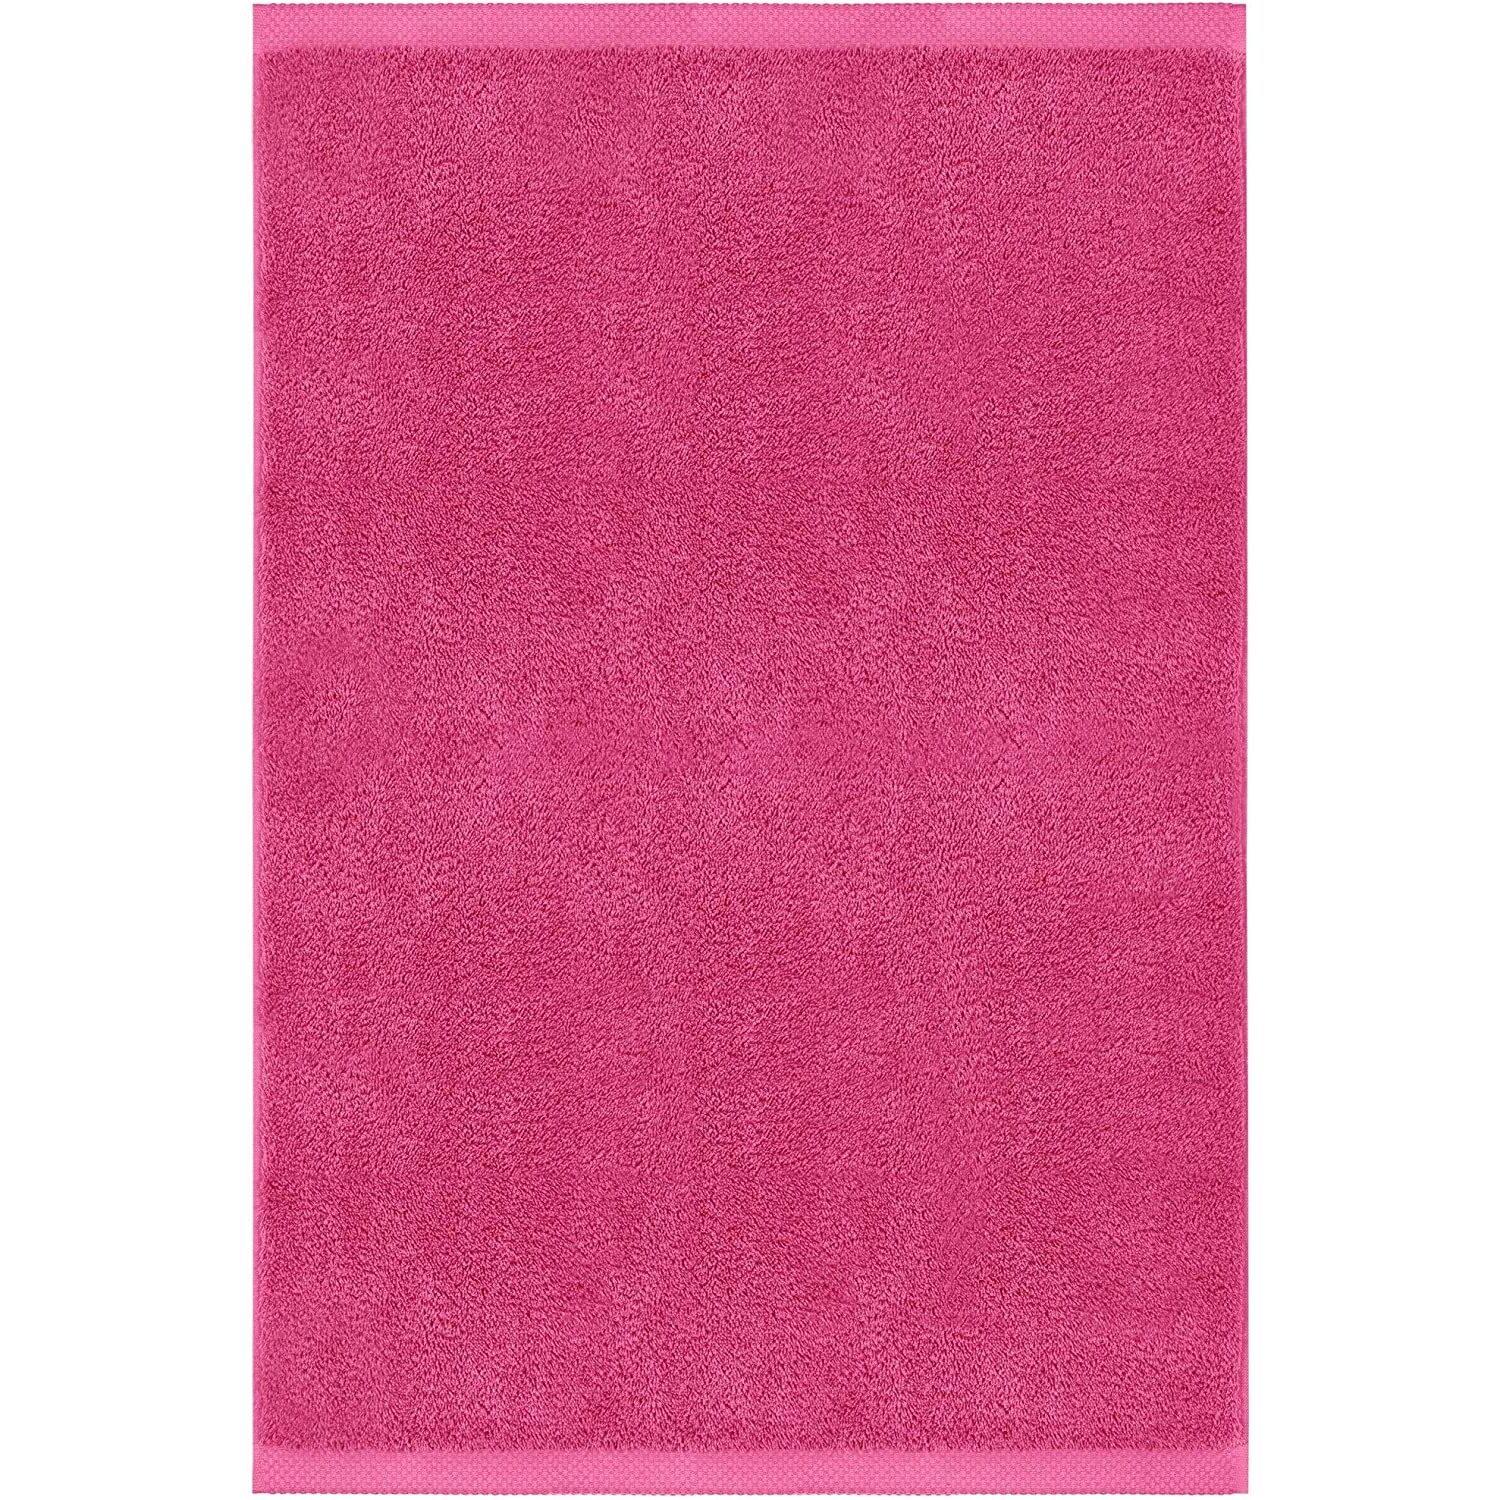 100x150 Badetuch Badelaken 100% Frottee Rosa aus Pure Handtücher - Strandtuch Baumwolle, cm, Pflaume ::